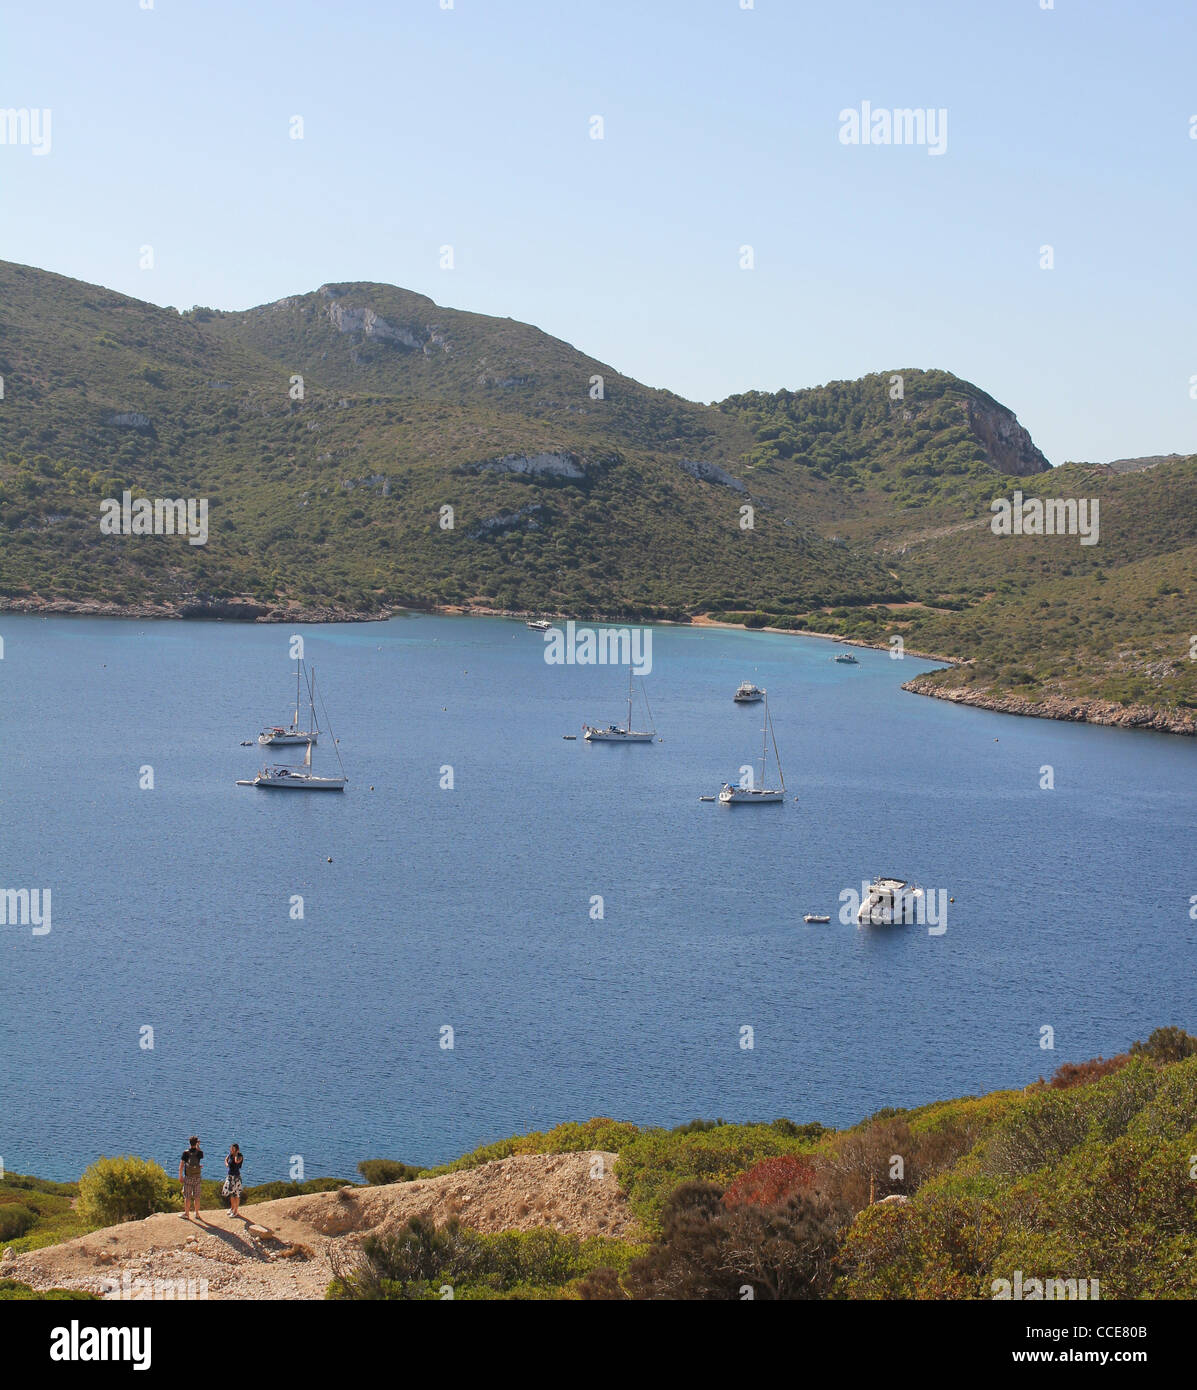 Scene on Cabrera Island, Cabrera Archipelago of islands, a Spanish Natural Park, located South East of Palma de Mallorca Stock Photo